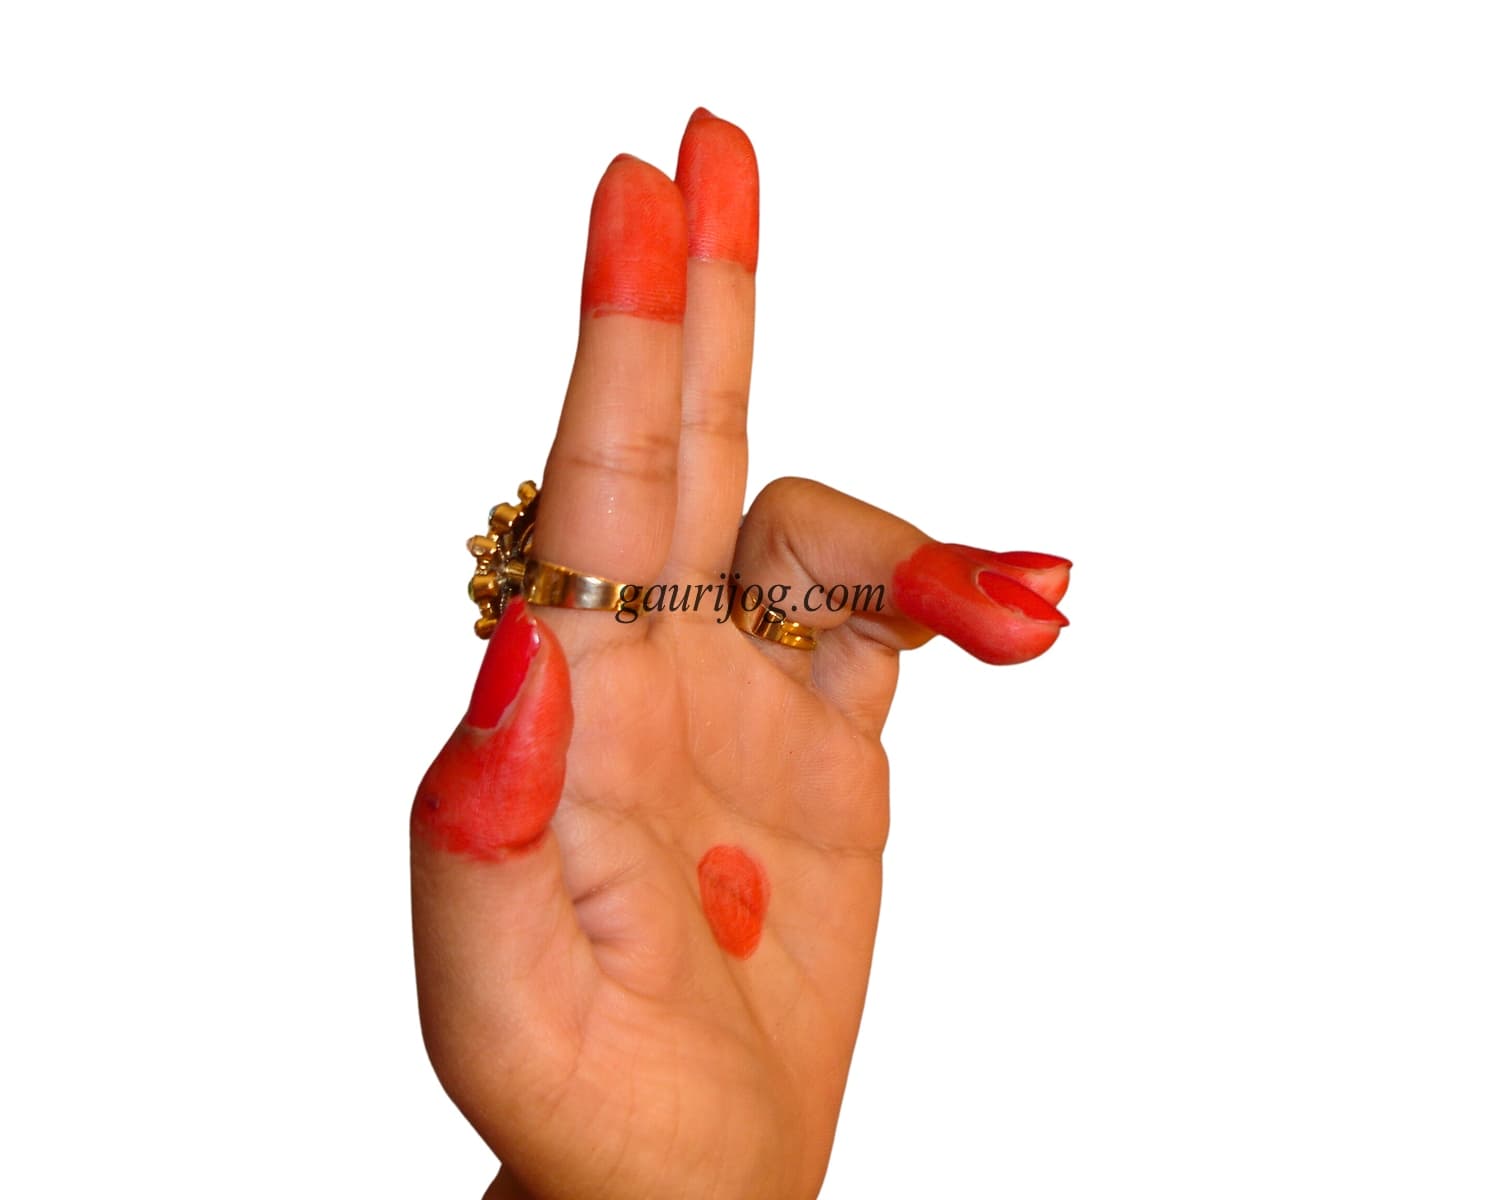 ArdhaPataka Hand Gesture by Gauri Jog